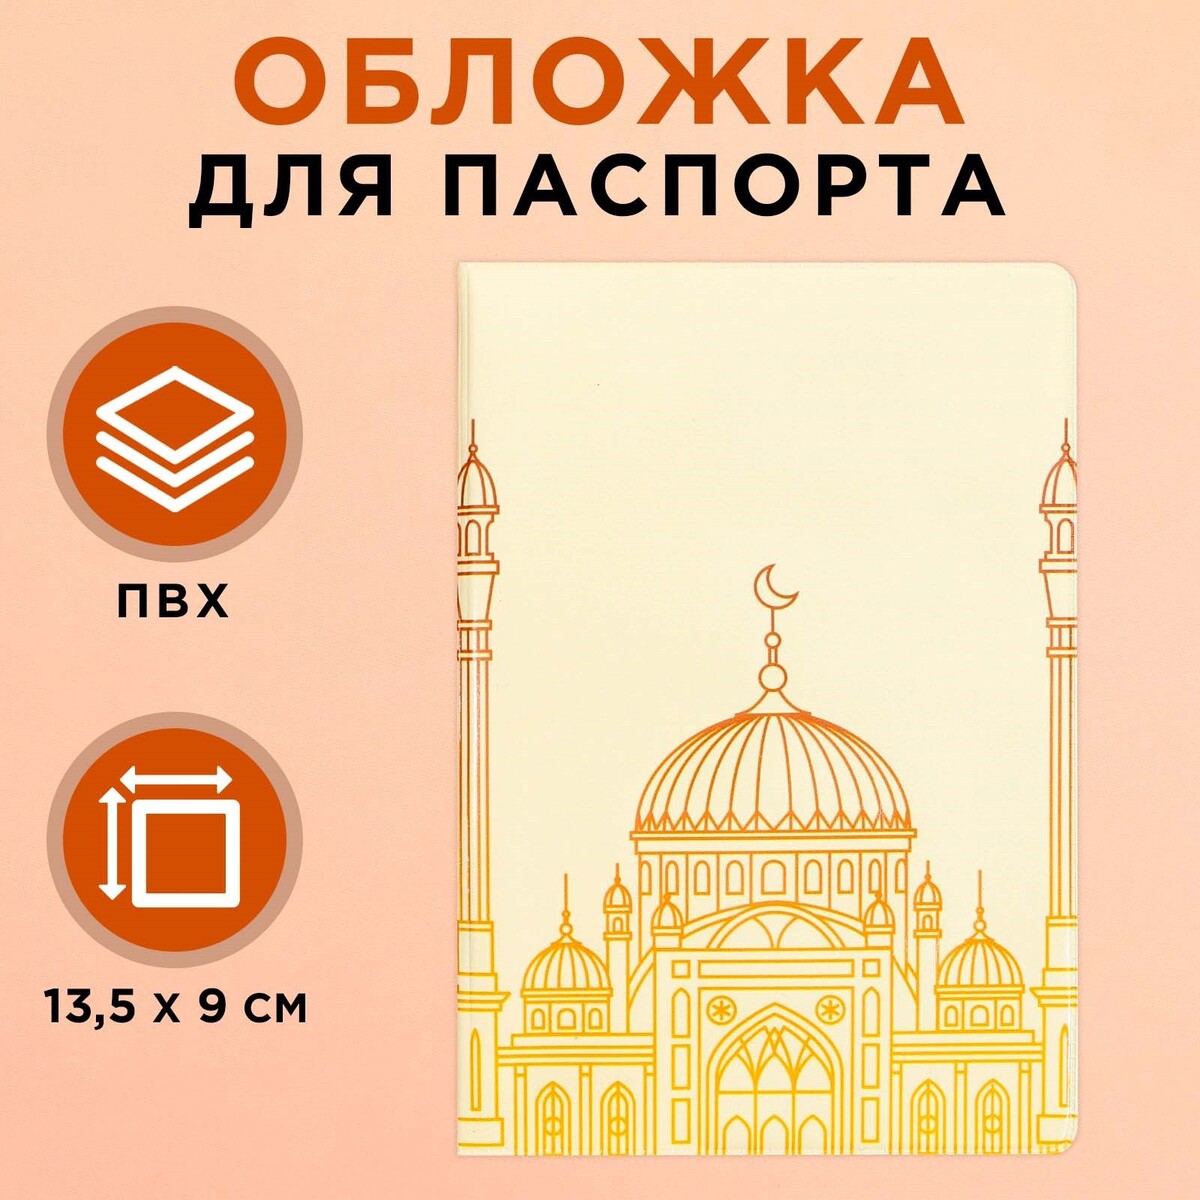 Обложка для паспорта на рамадан No brand